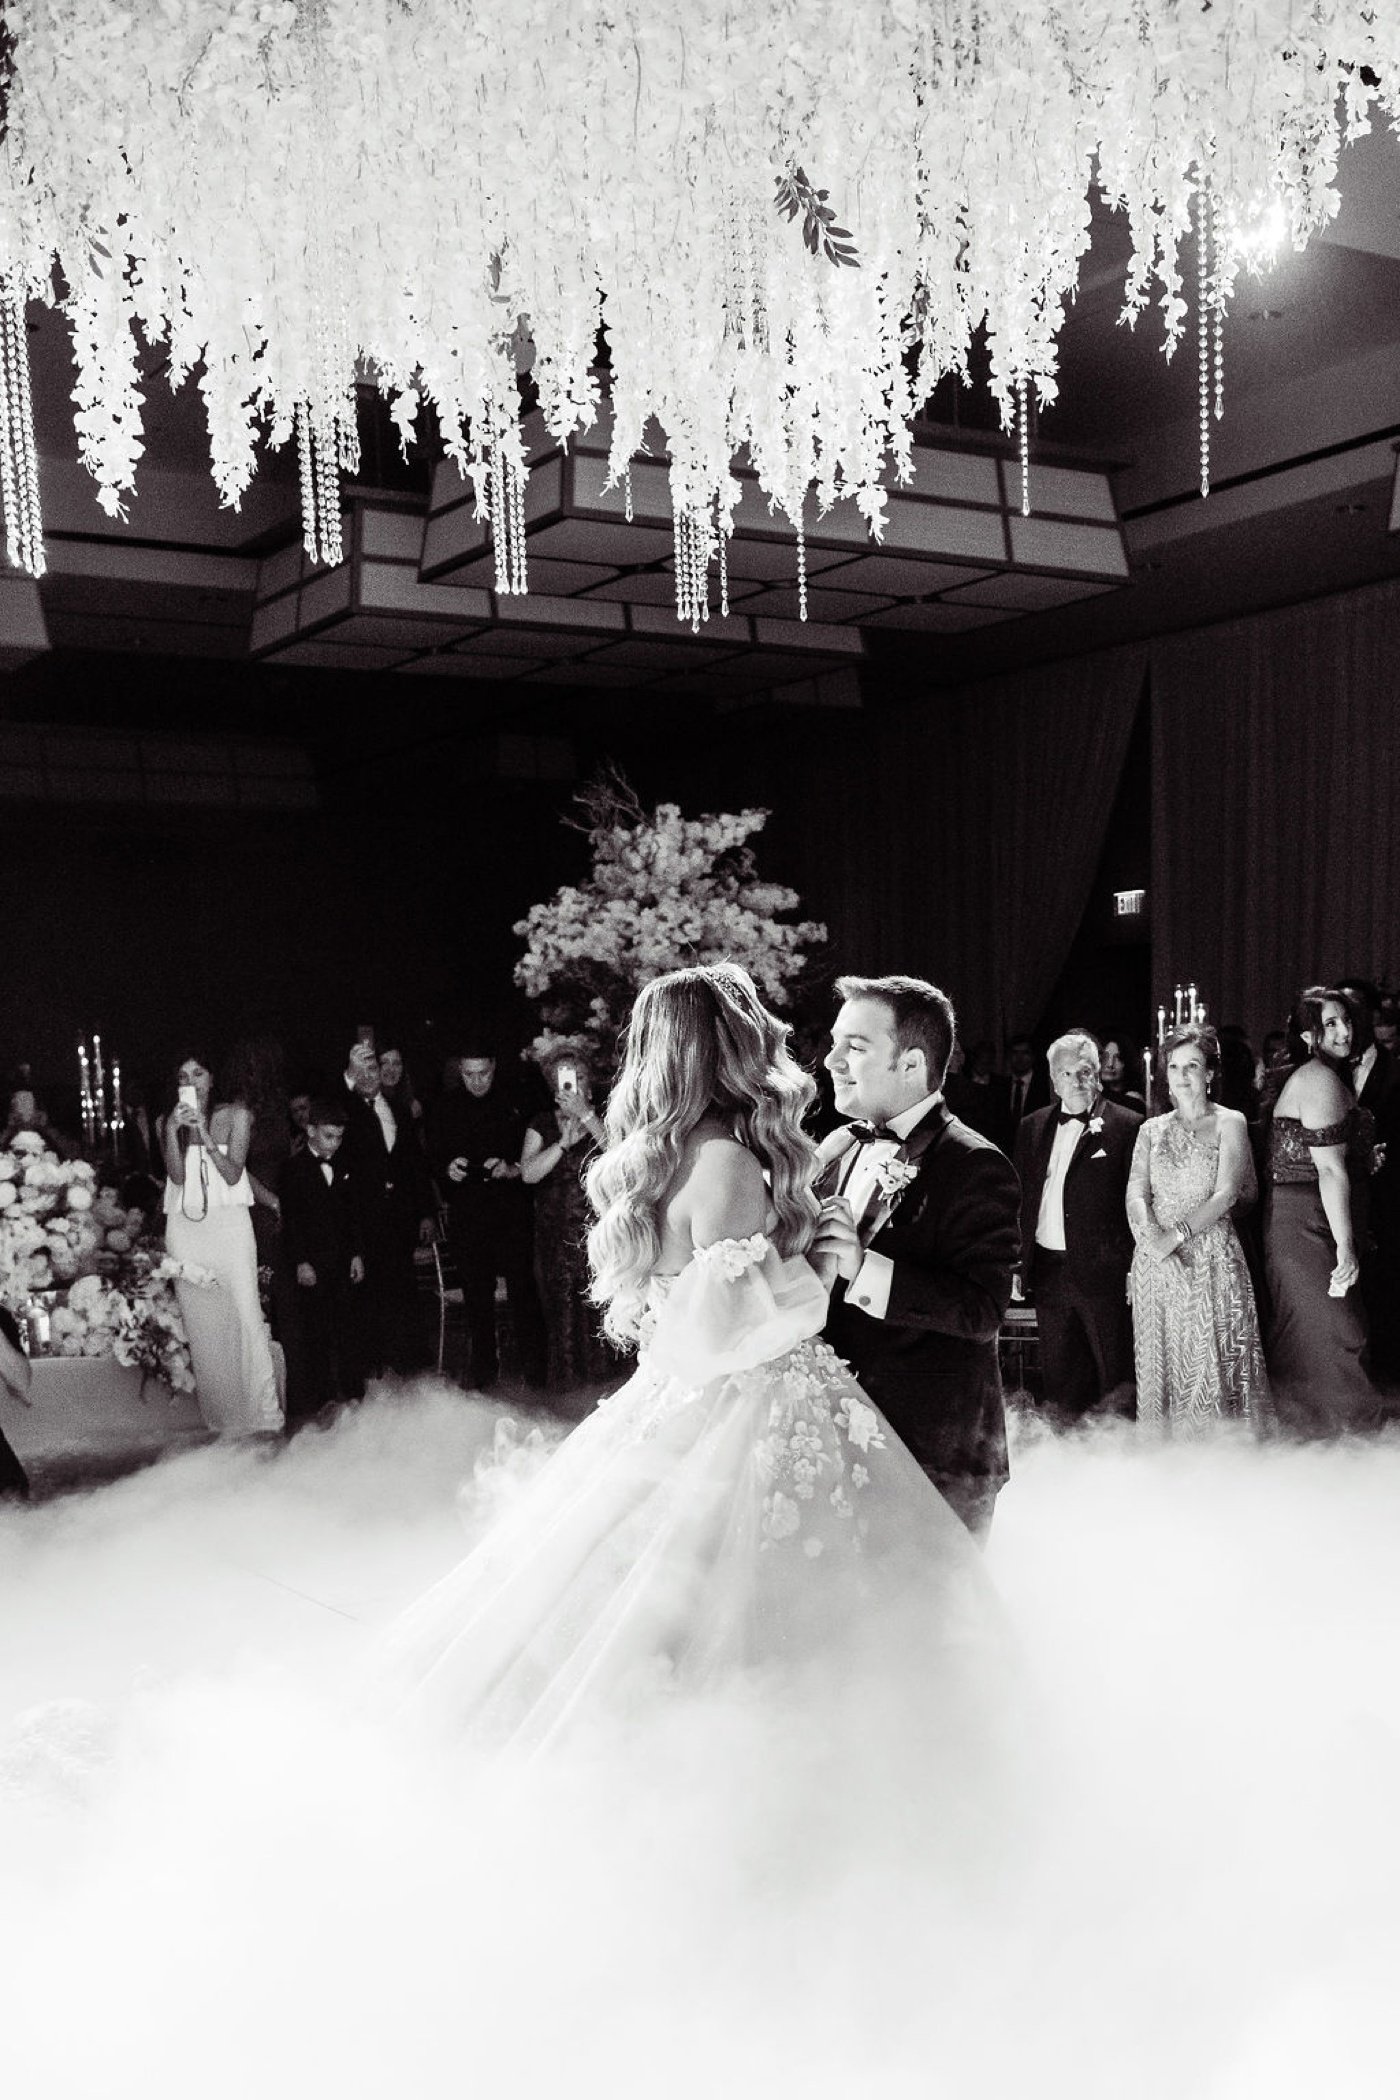 Wedding first dance with a fog machine at InterContinental Boston